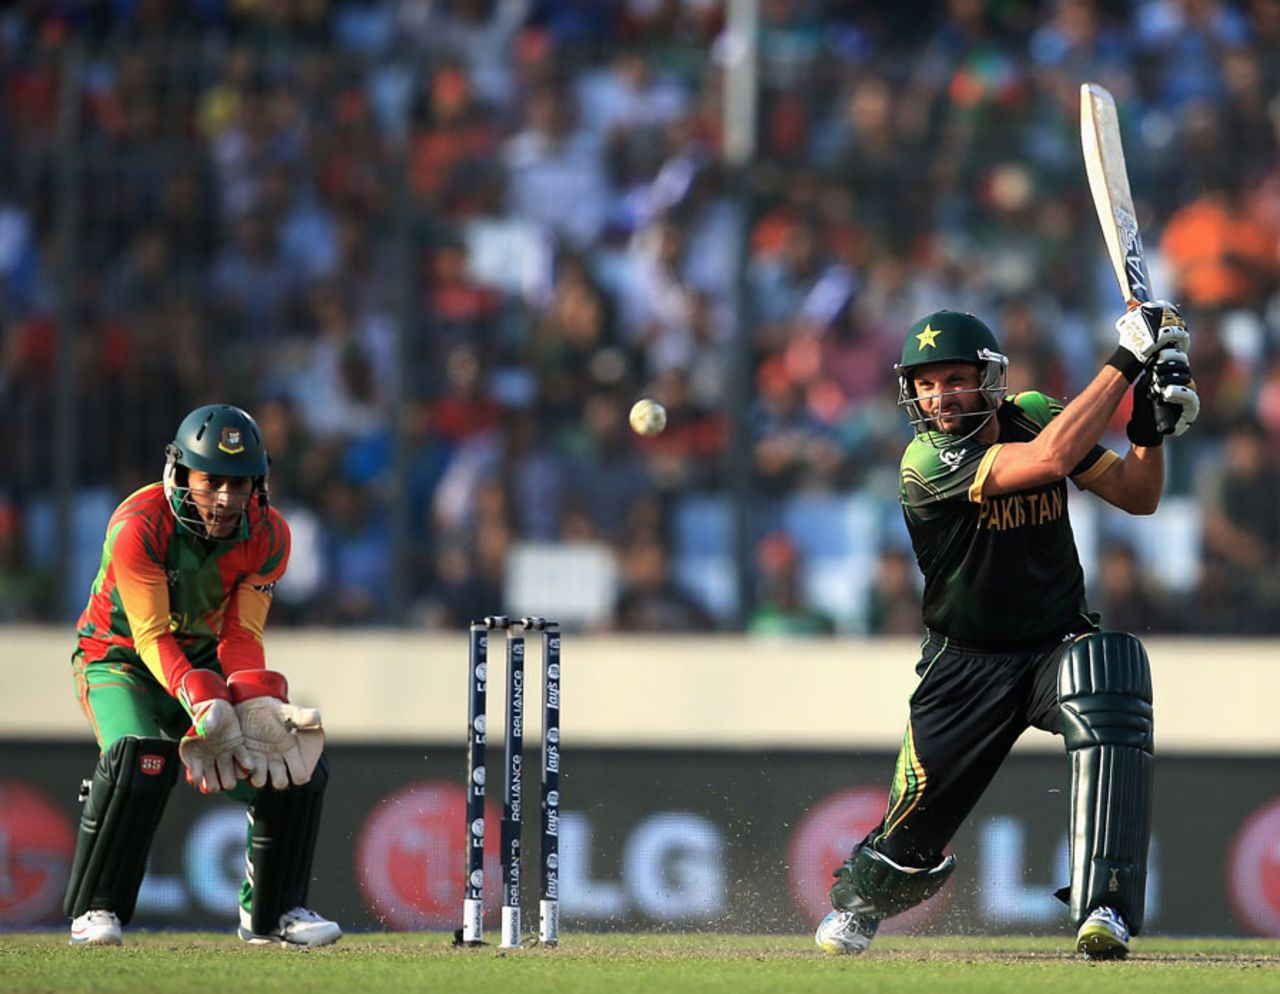 Shahid Afridi provided some late impetus, Bangladesh v Pakistan, World Twenty20, Group 2, Mirpur, March 30, 2014